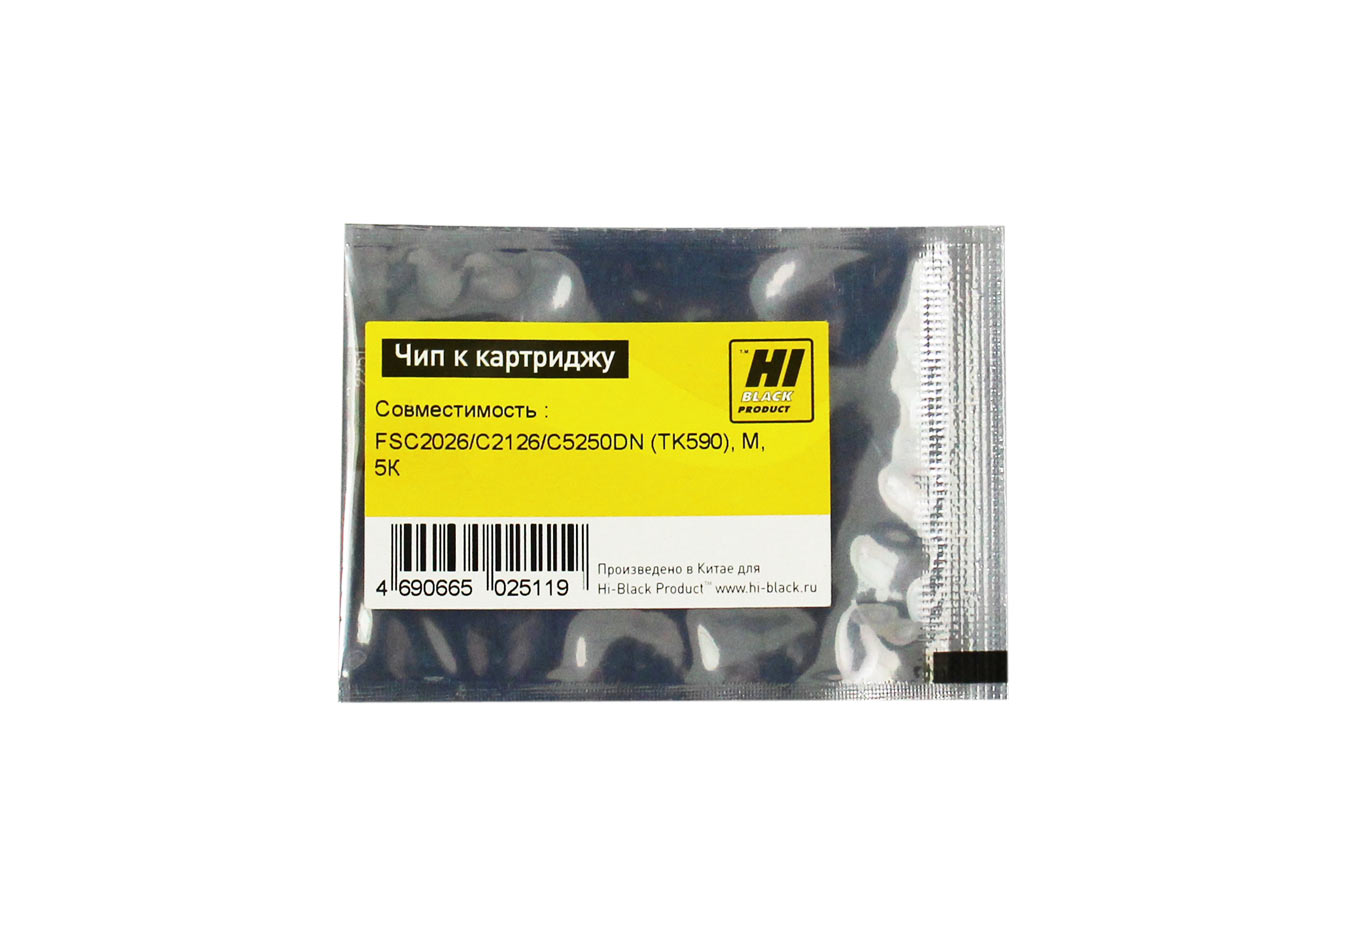 Чип Hi-Black картриджа (TK-590M) для Kyocera FS-C2026/ C2126MFP/ C5250DN, пурпурный (5000 стр.)